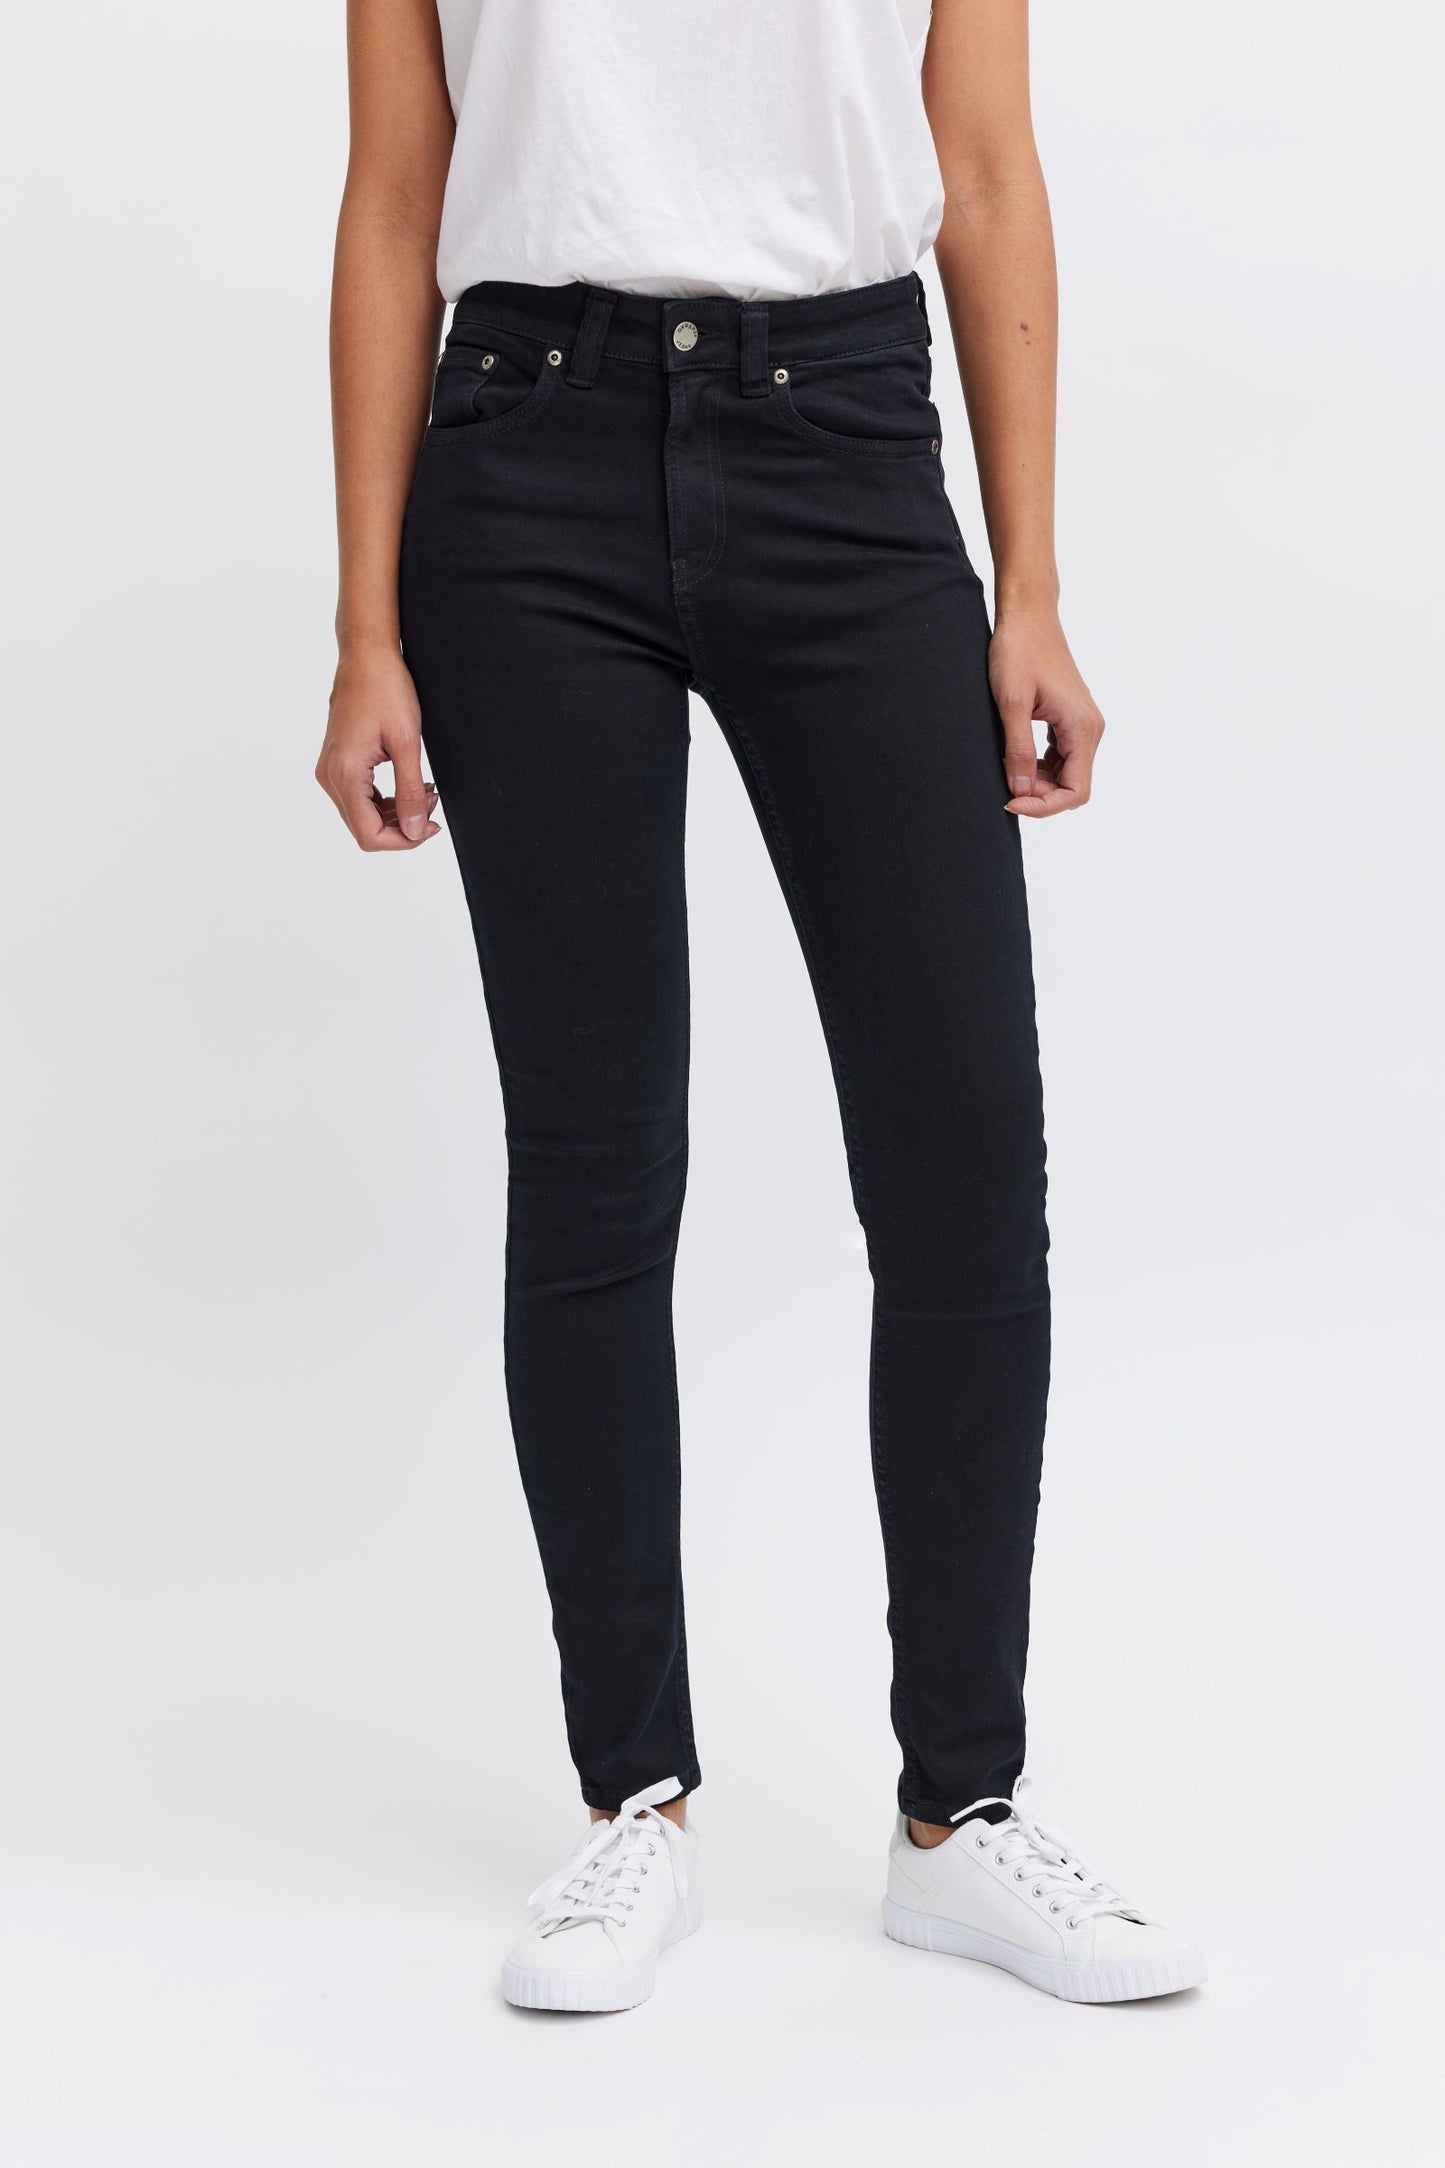 Sustainably made black denim - Skinny jeans for women